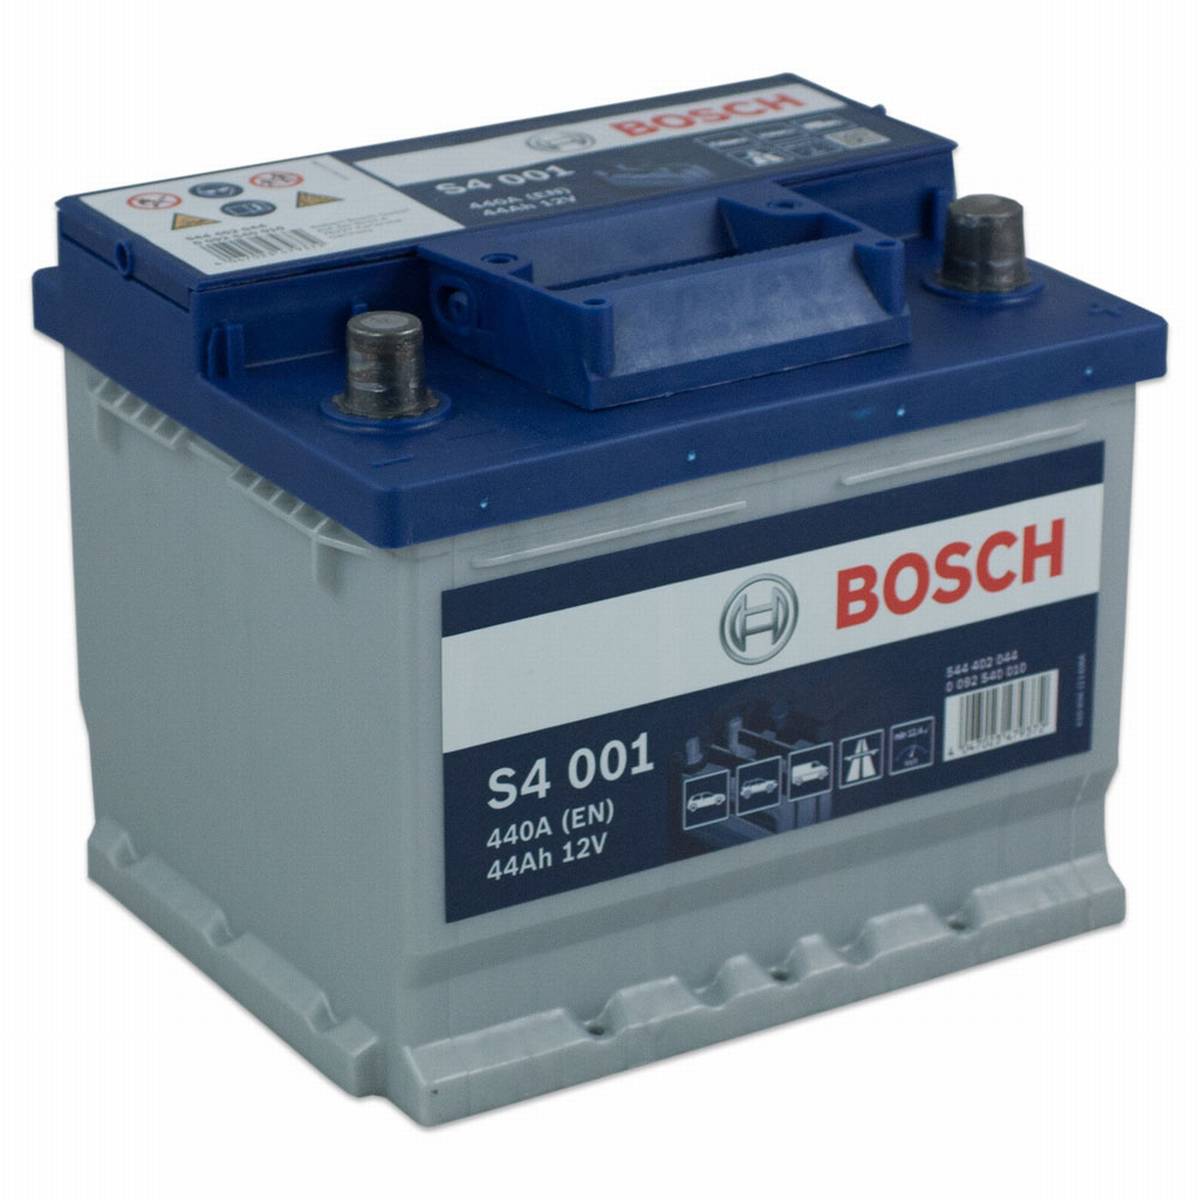 Bosch S4 001 Autobatterie 12V 44Ah 440A, Starterbatterie